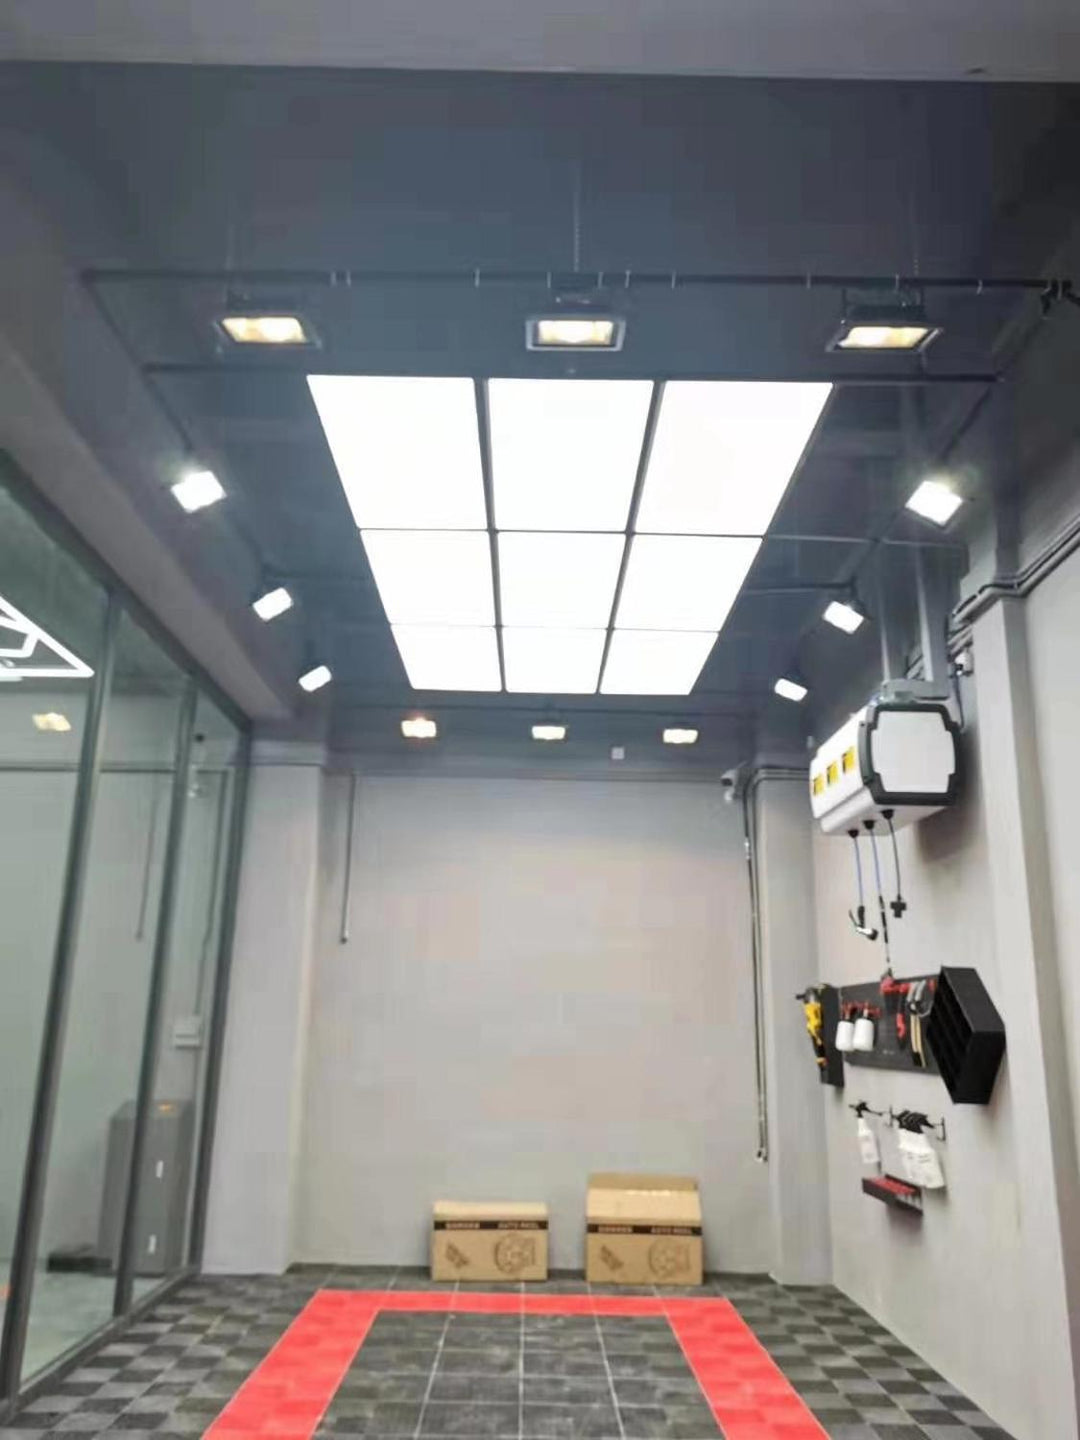 Auto Spa Gantry Lighting: Enhancing Car Wash Stations & Decorative Light Tunnels Ge6002 Ceiling